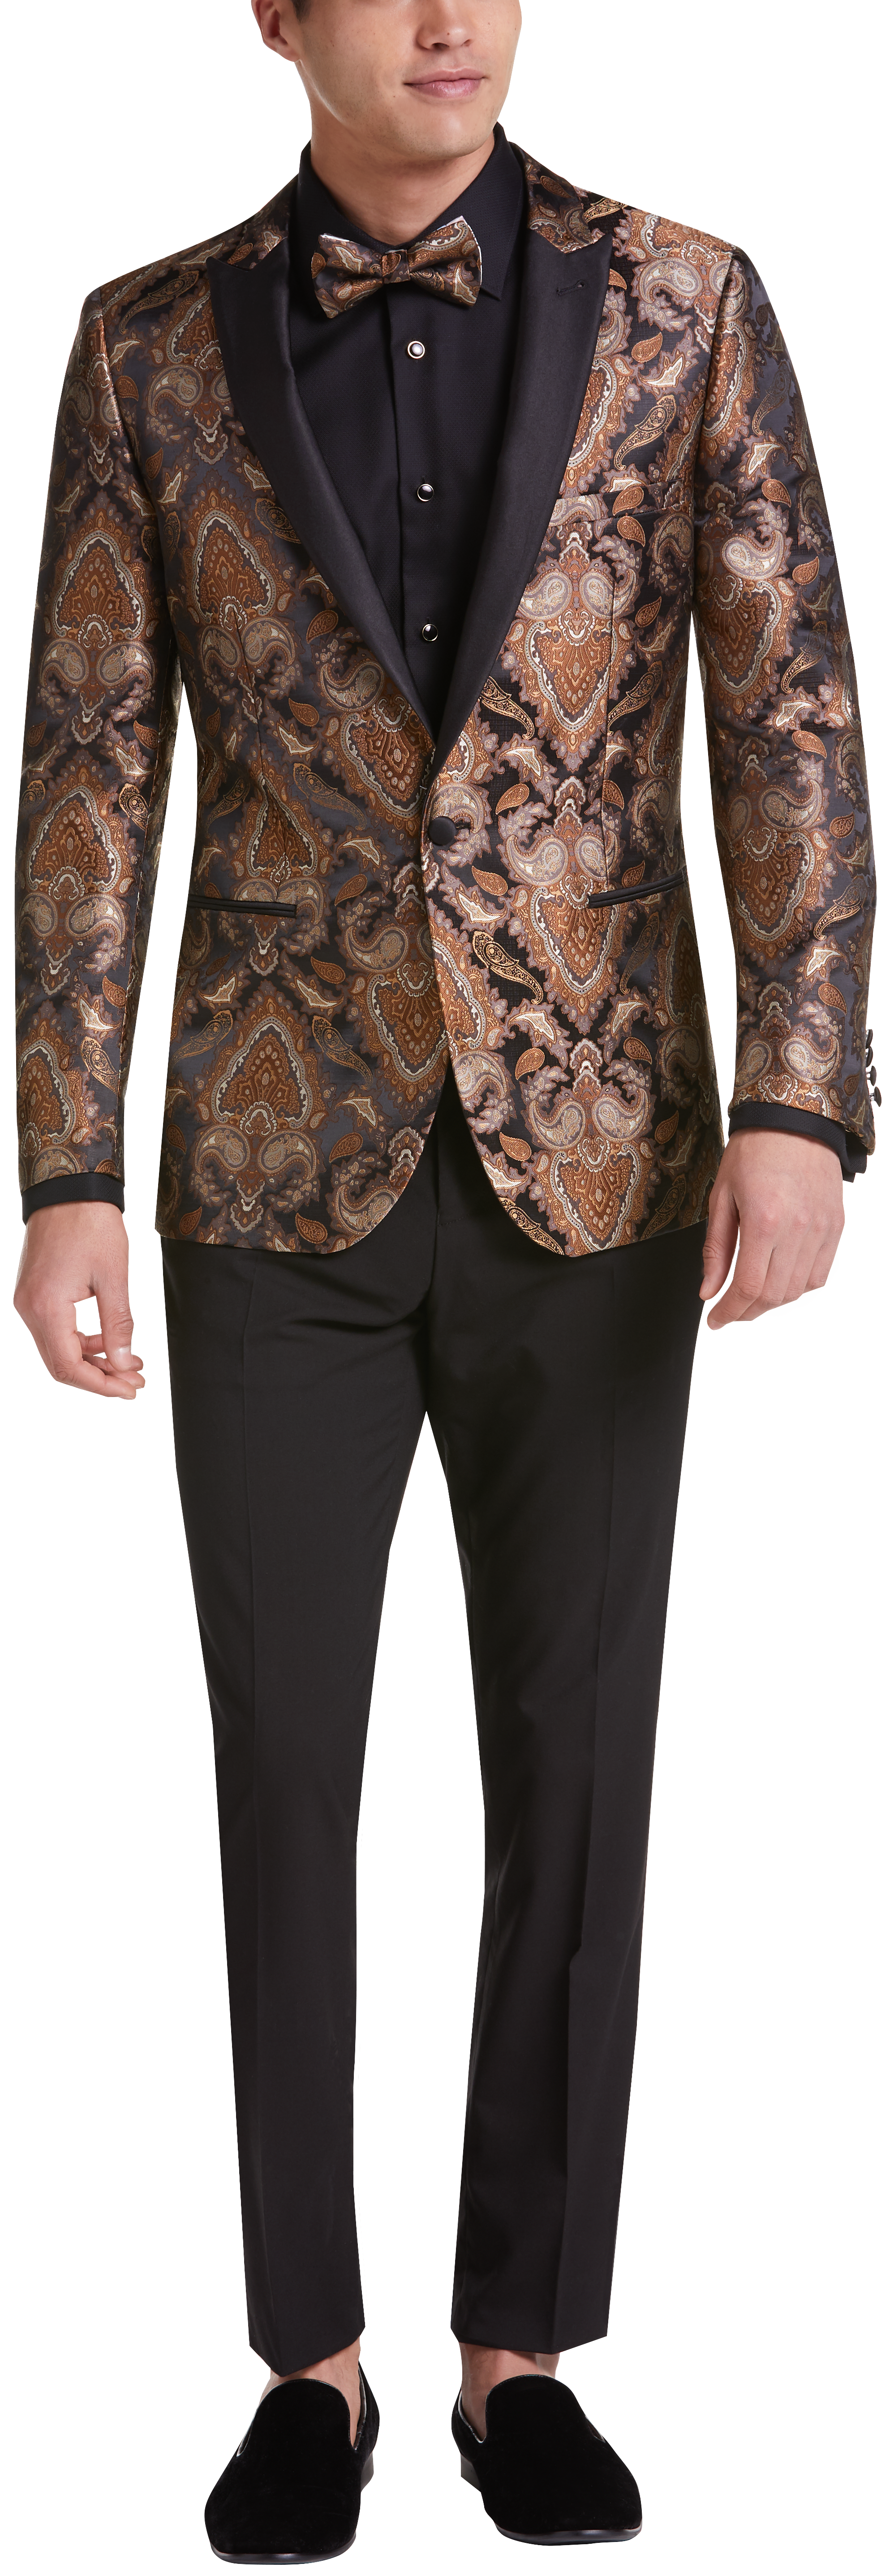 Paisley & Gray Slim Fit Suit Separates Formal Coat, Gold & Bronze ...